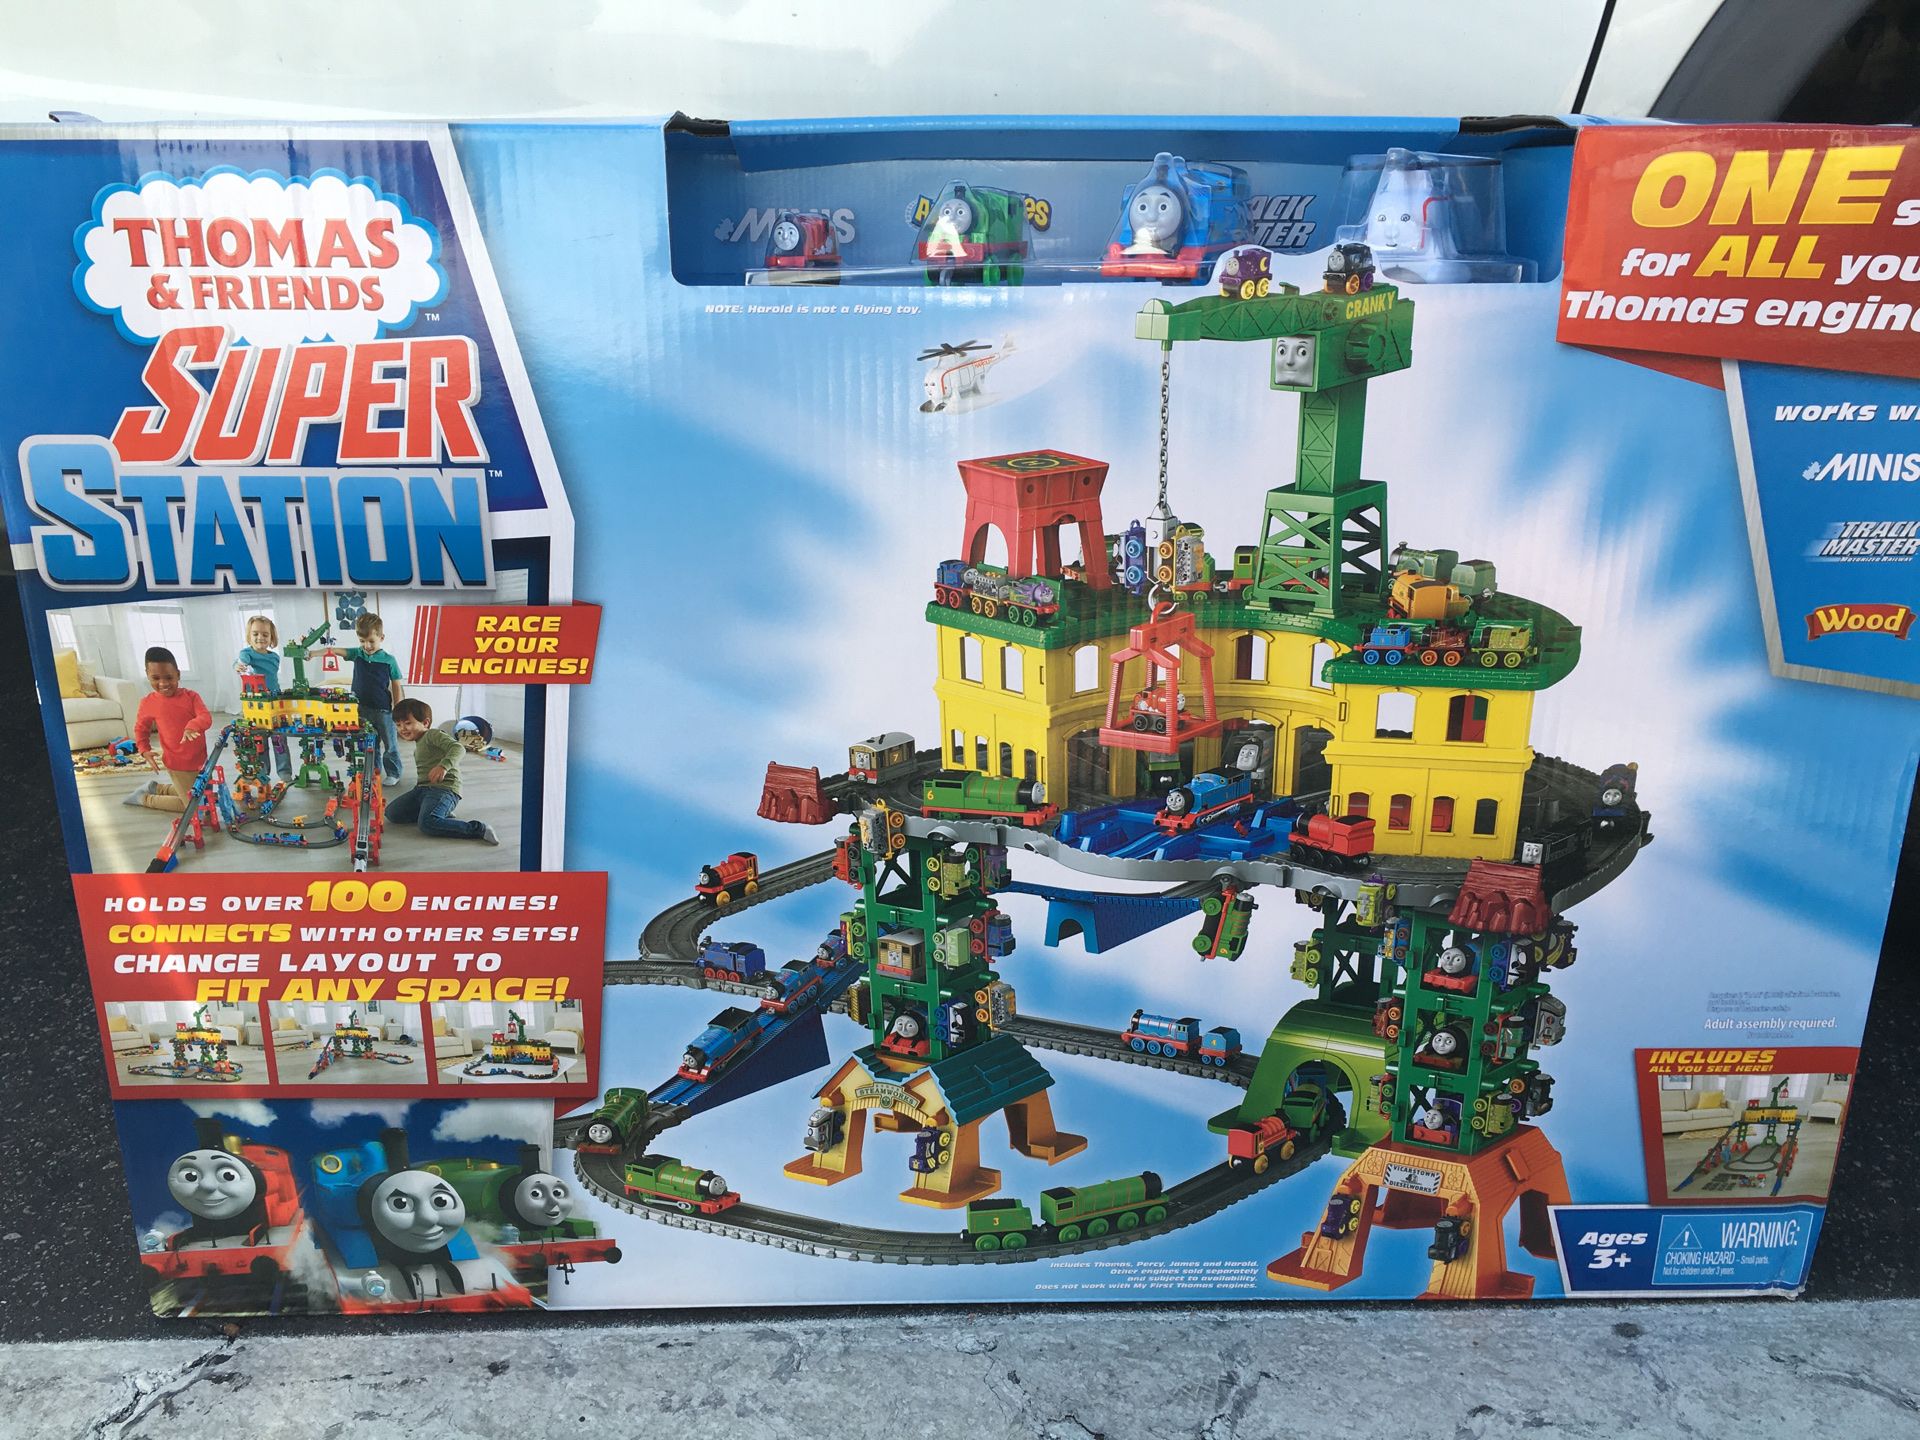 Thomas the Train & Friends Super Station Toy Set